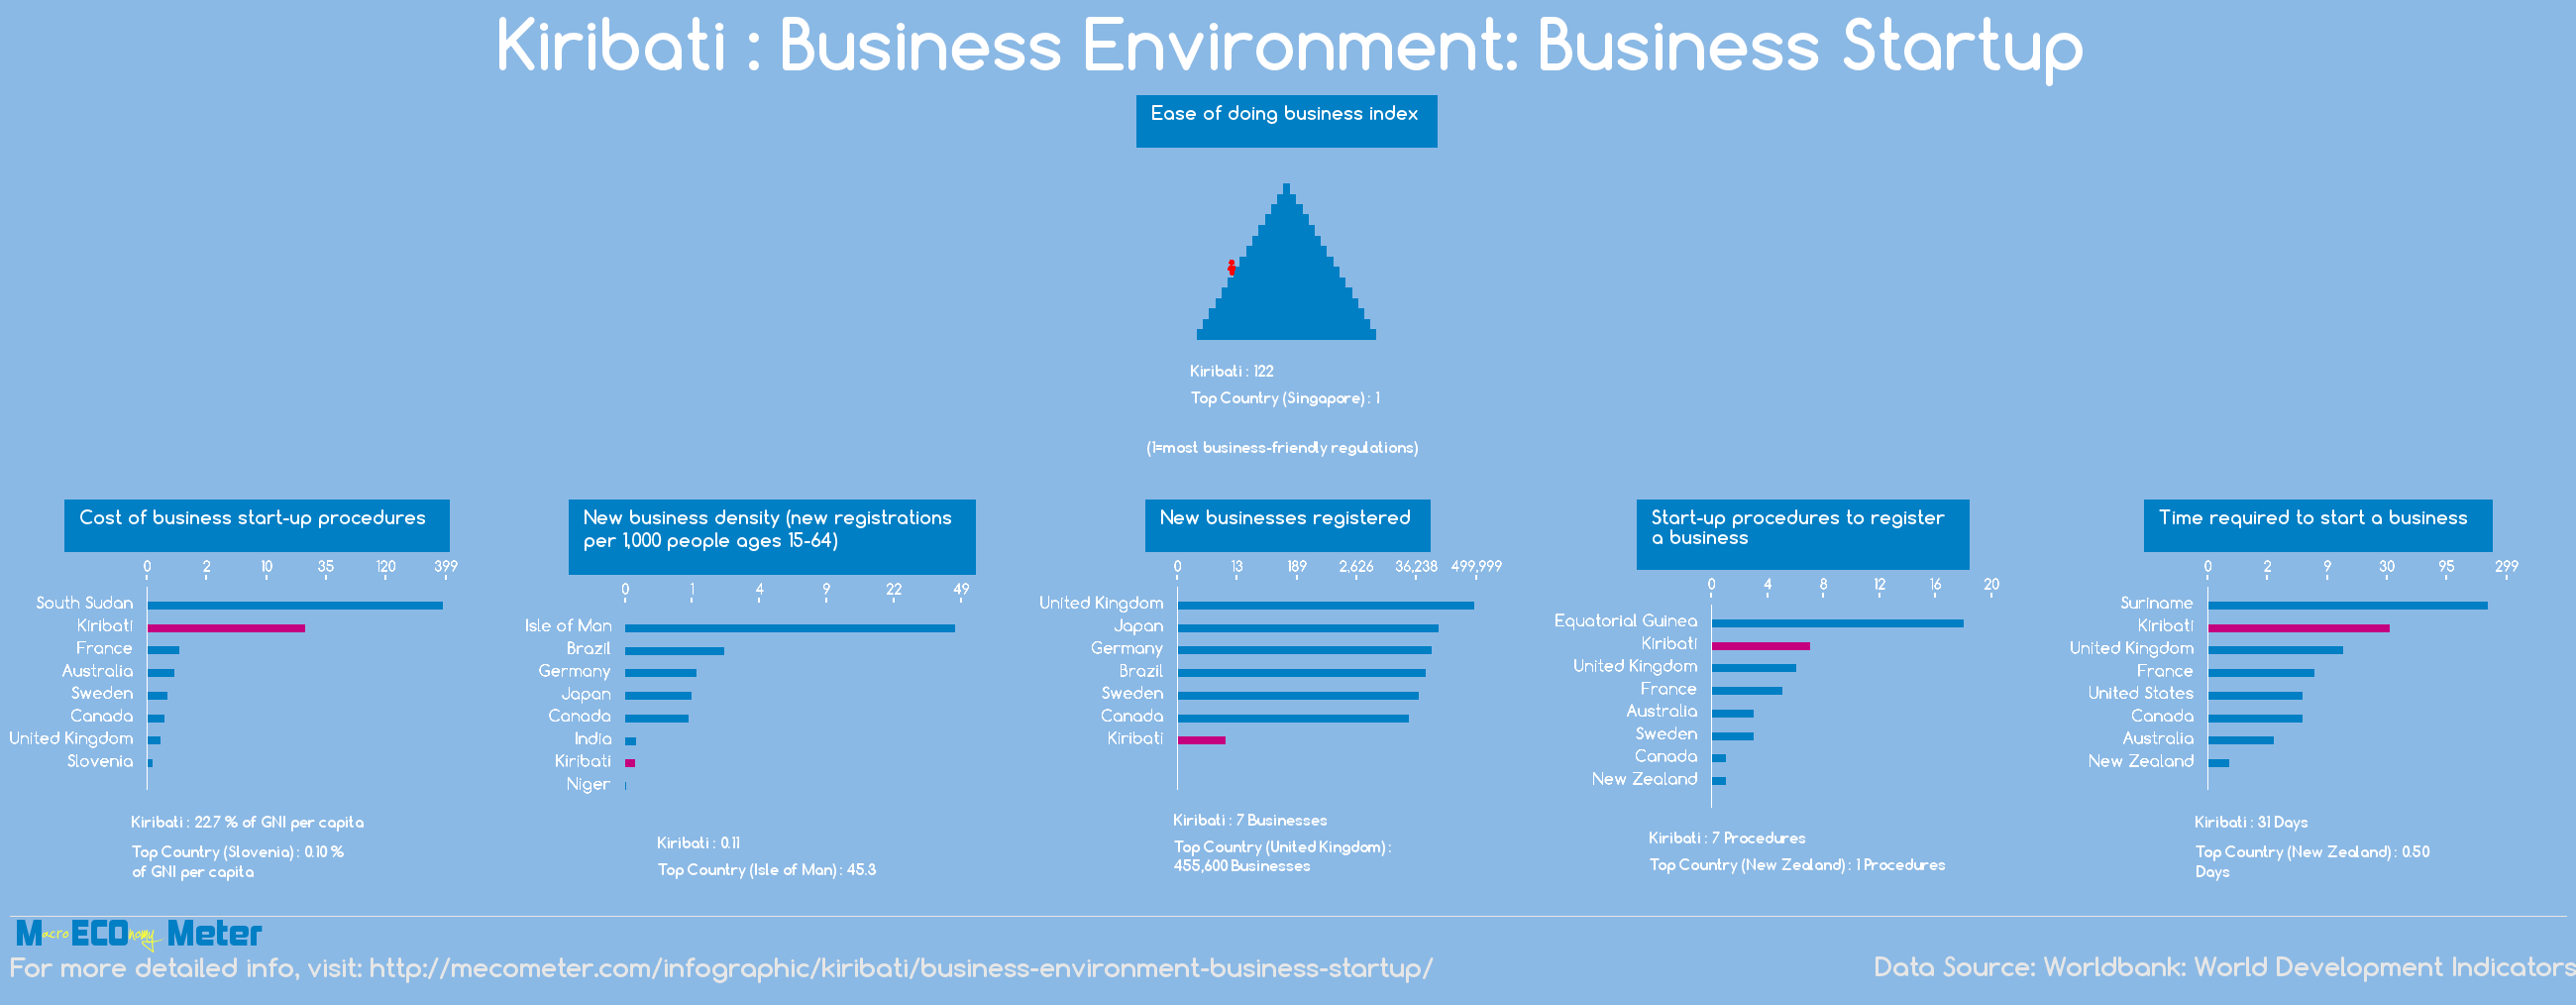 Kiribati : Business Environment: Business Startup